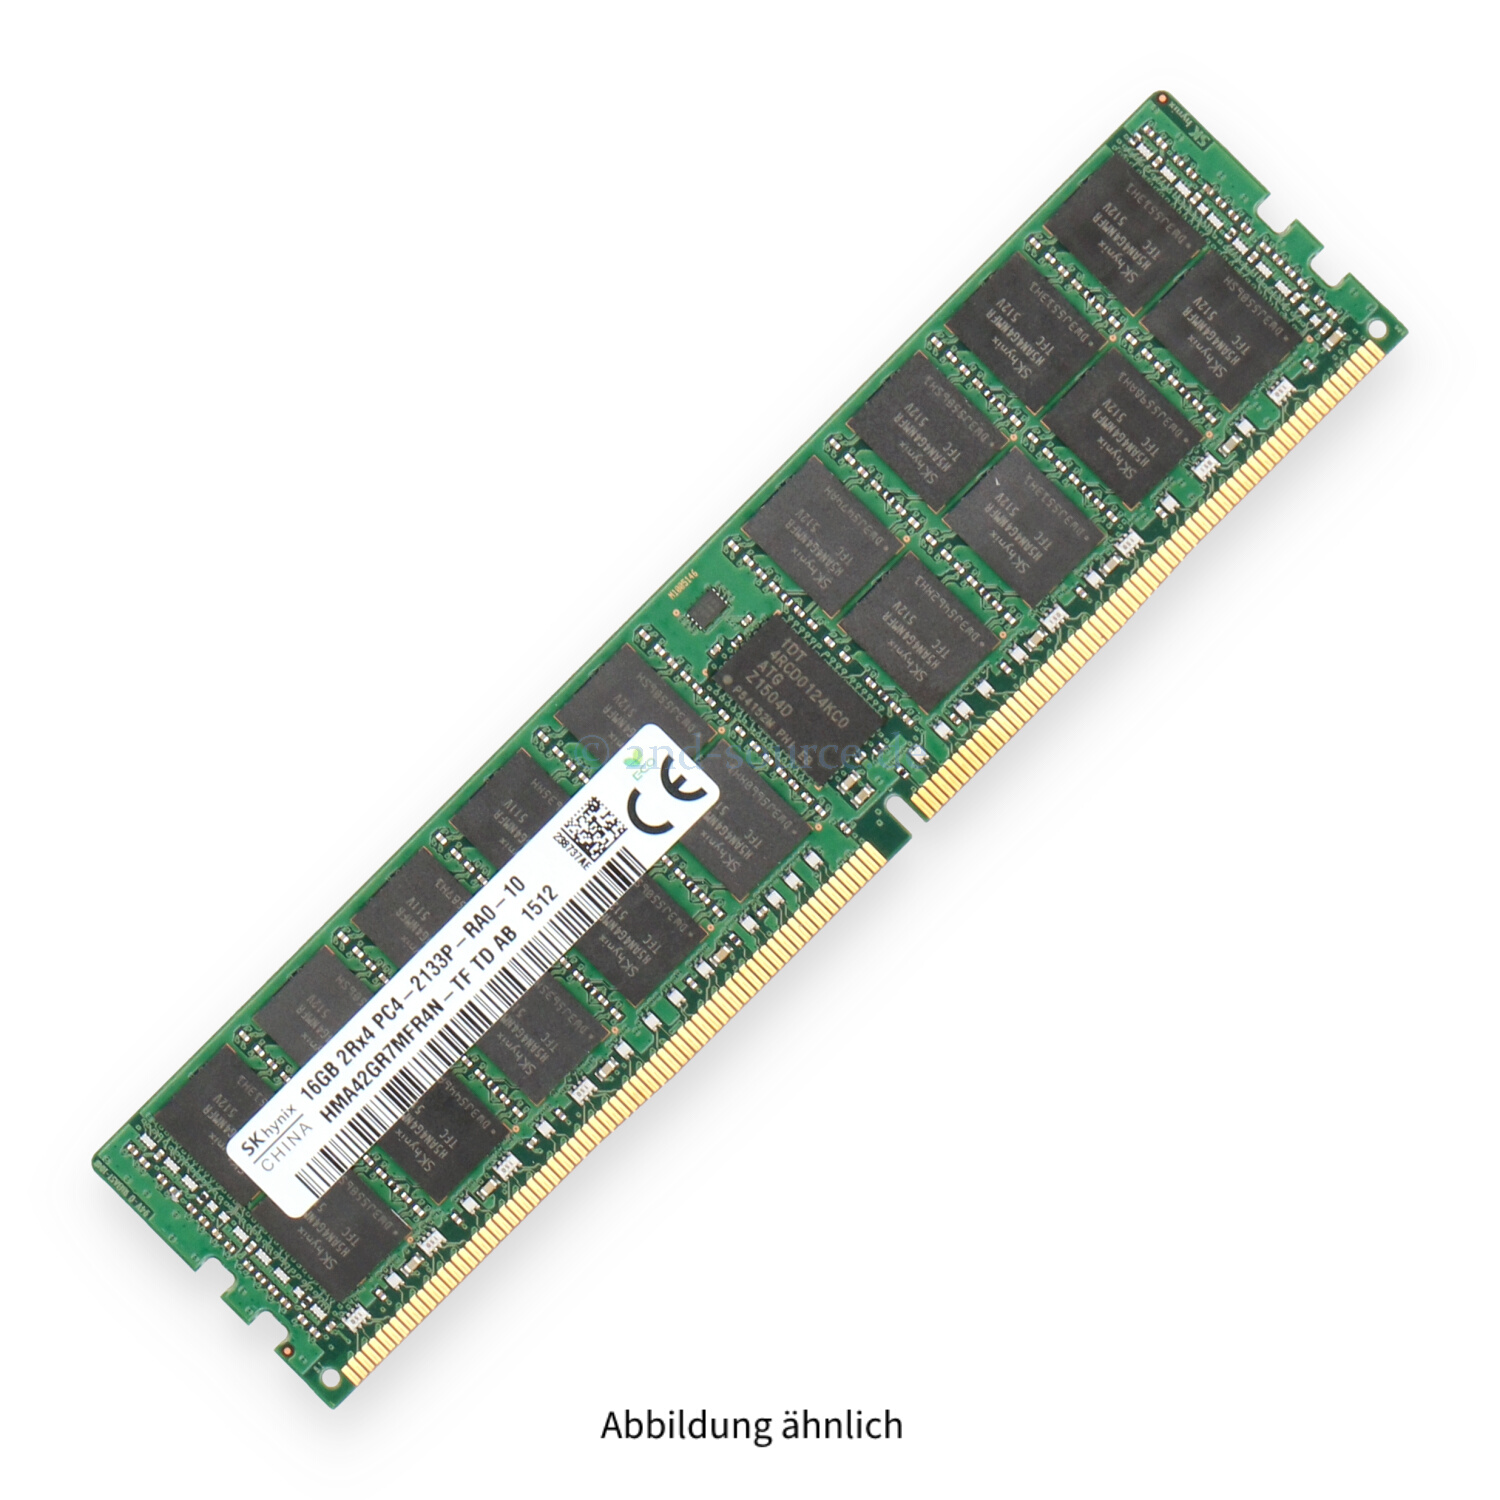 Hynix 16GB PC4-17000P-R DIMM Dual Rank x4 (DDR4-2133) Registered ECC HMA42GR7MFR4N-TF